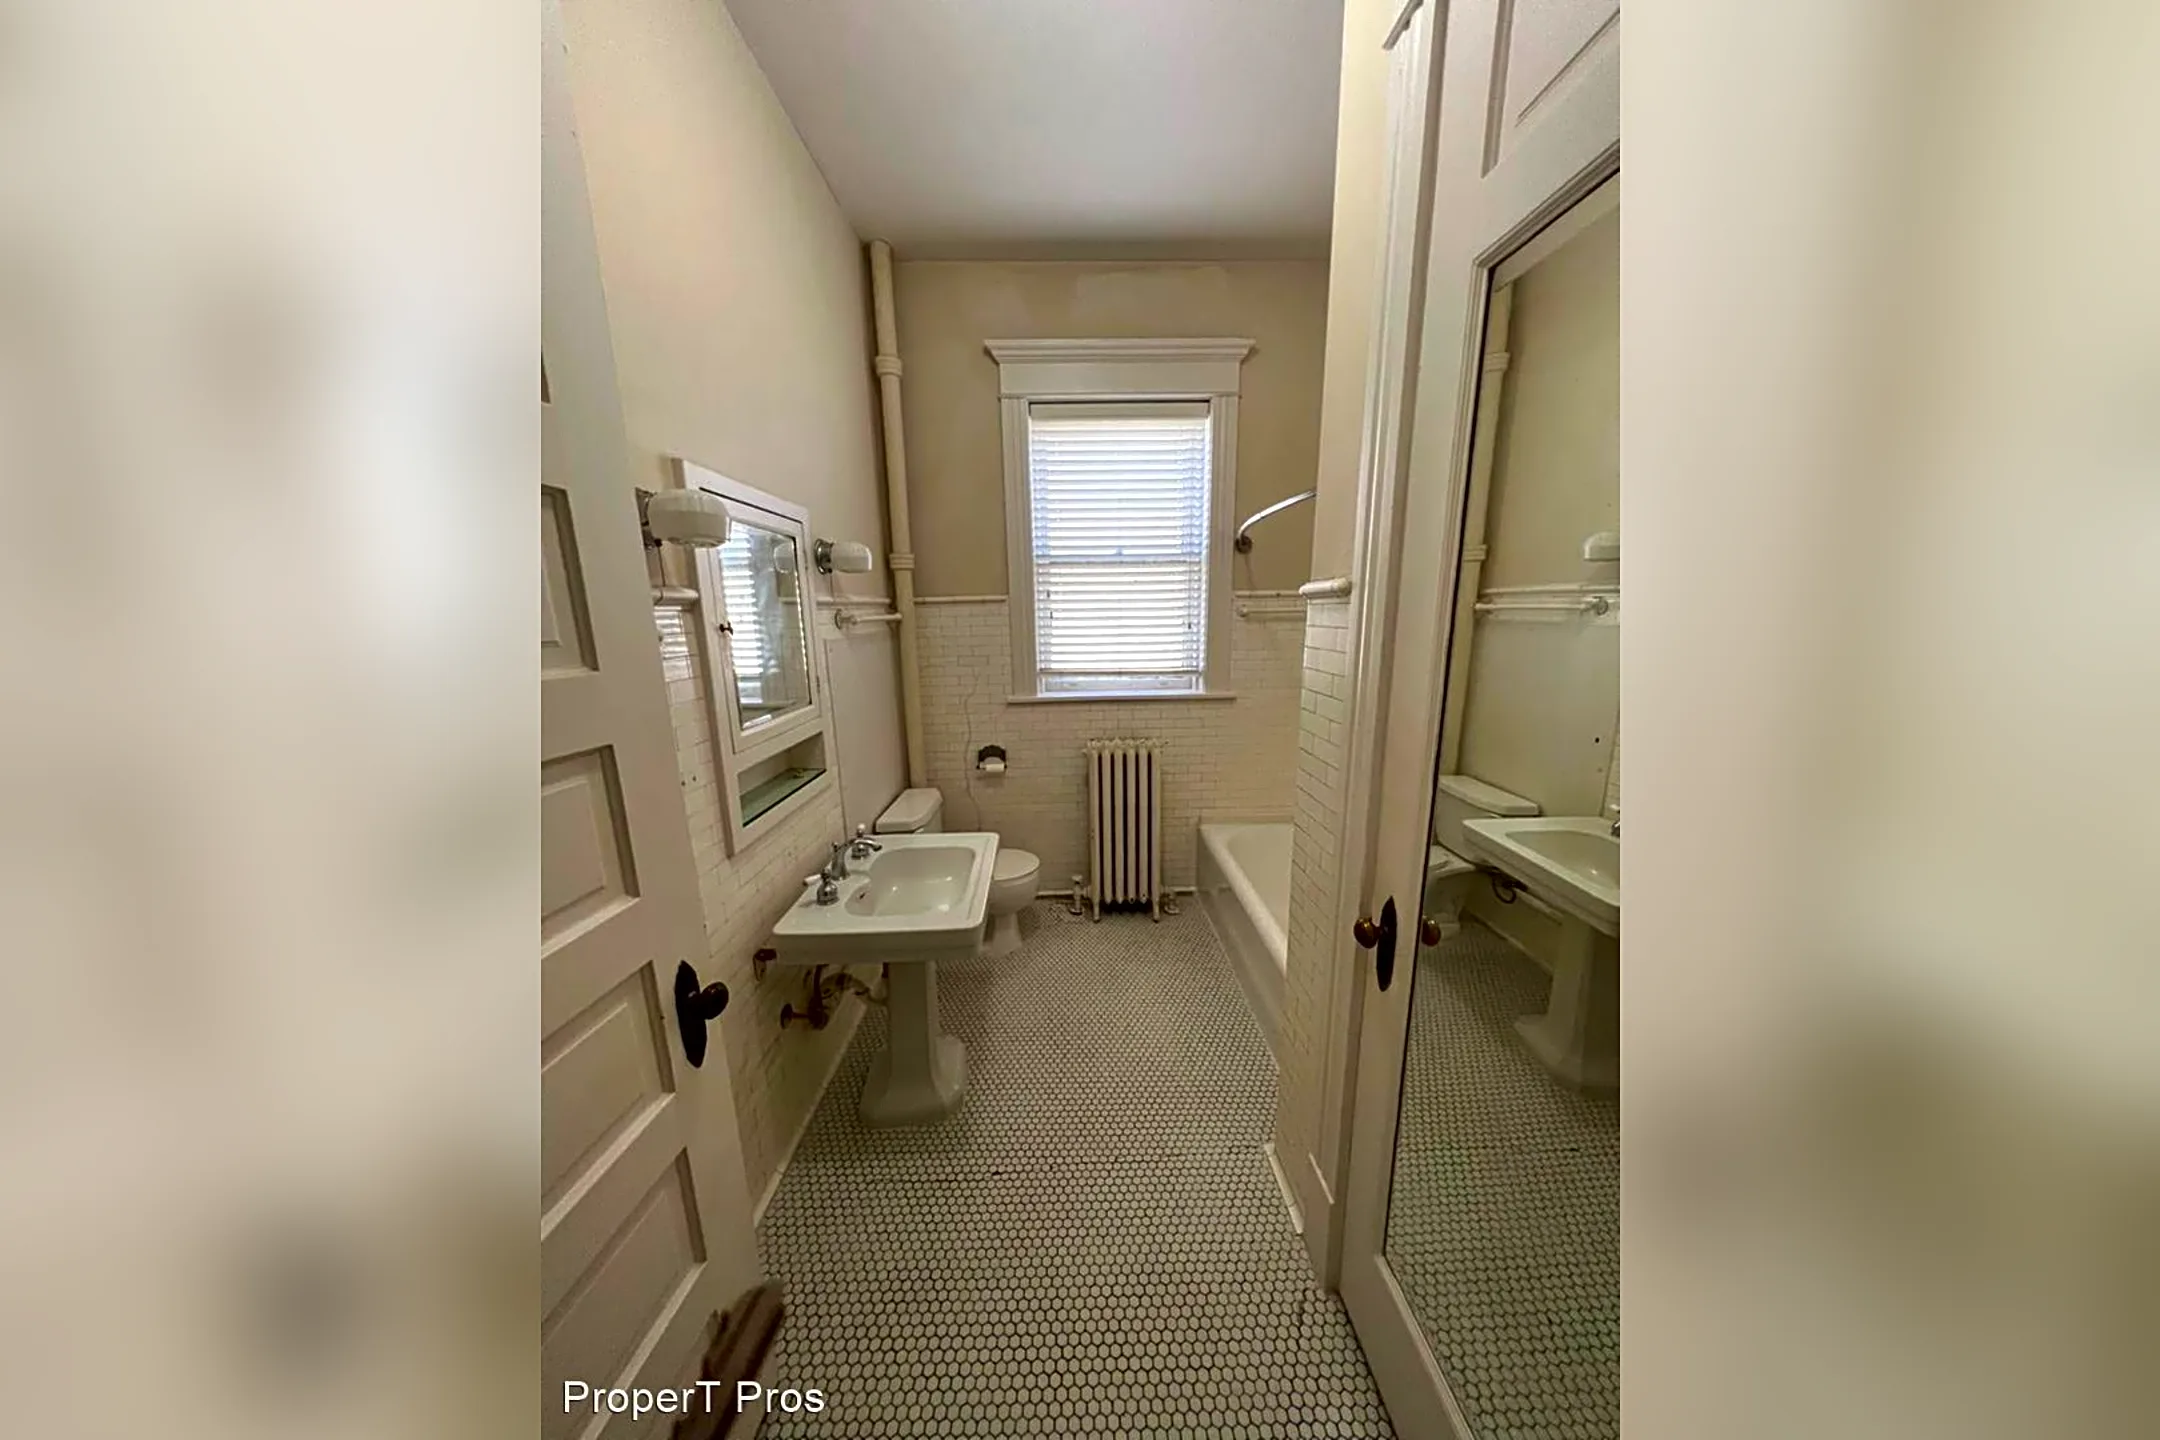 Bathroom - 807 SE 1st St - Evansville, IN